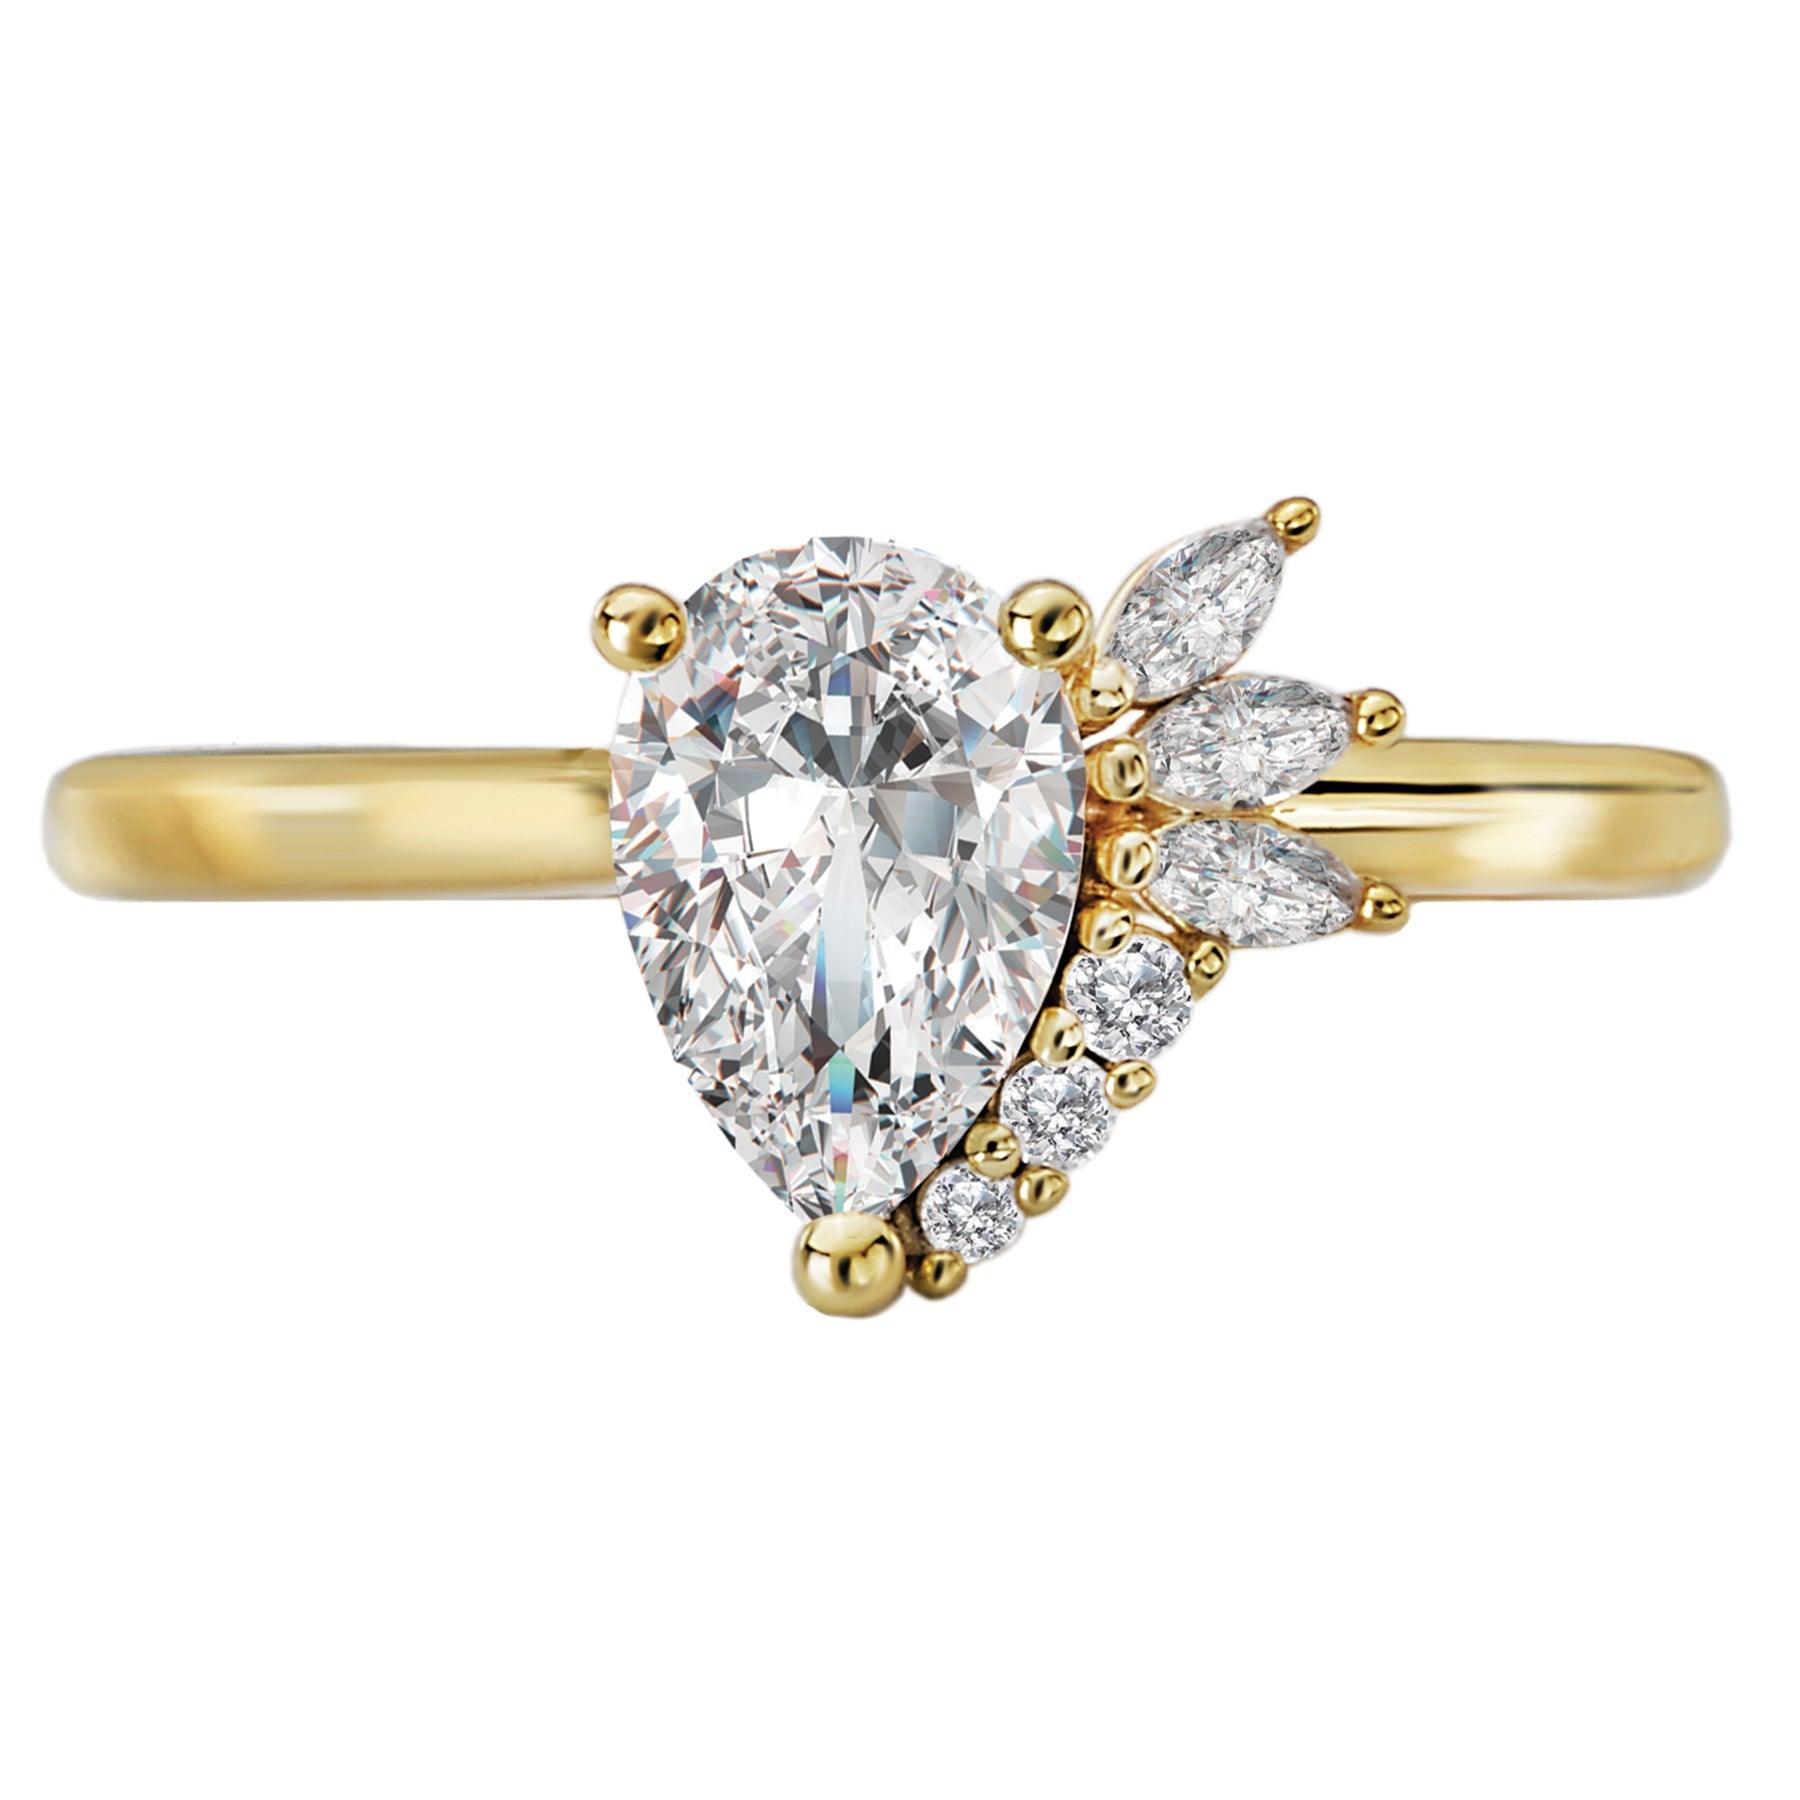 BW JAMES Engagement Rings "The Dana" Pear Shape Free Form Semi-Mount Diamond Ring